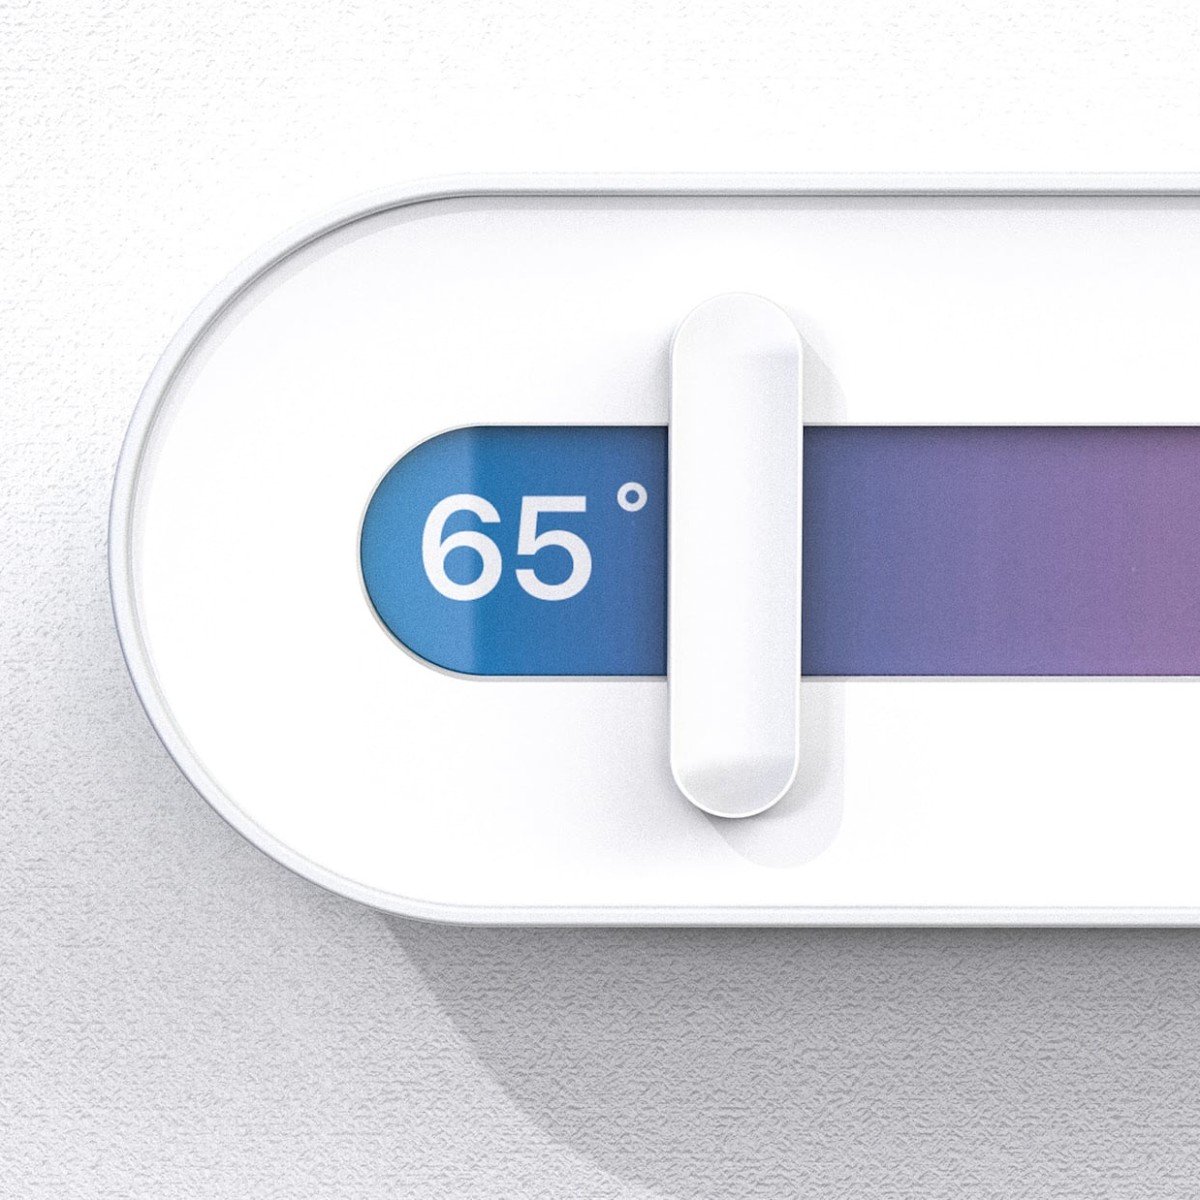 Ce thermostat minimaliste utilise un écran OLED clair